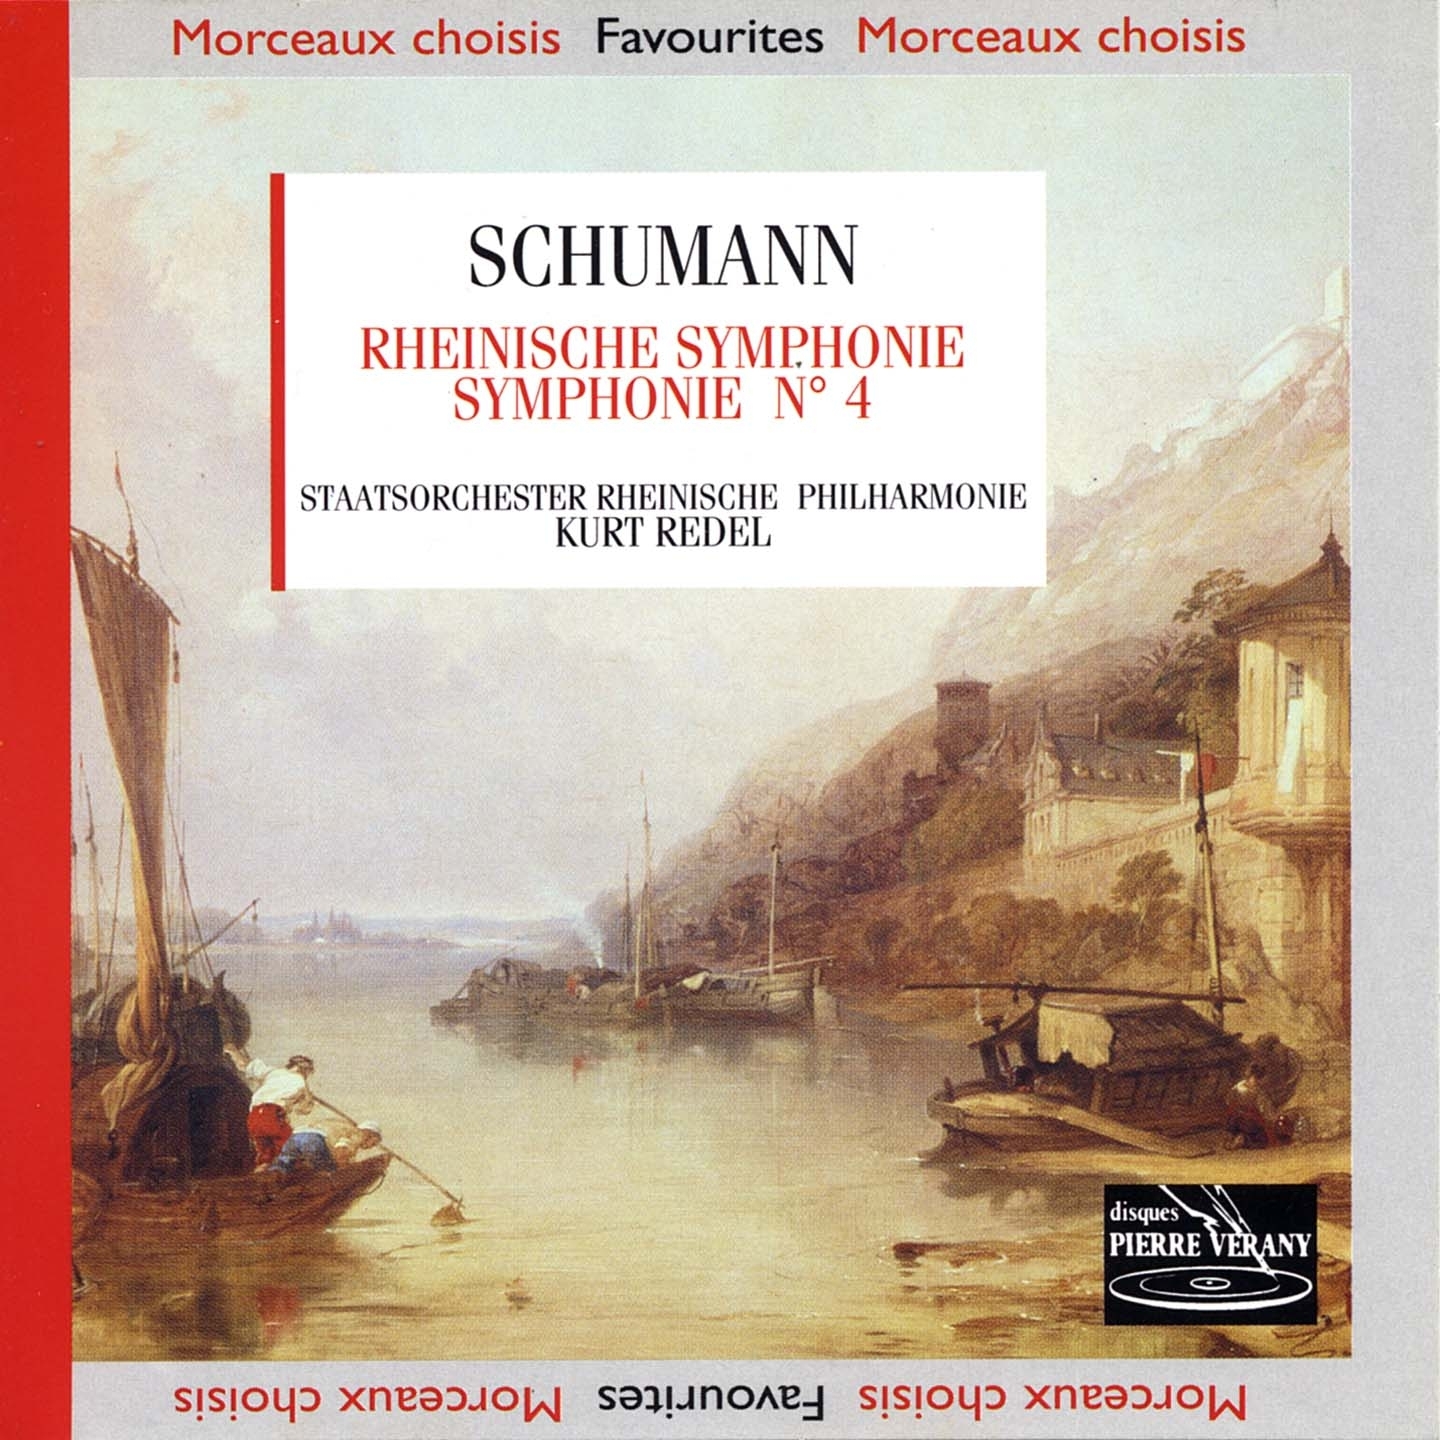 Symphonie n 3 en mi be mol majeur, Op. 97 Symphonie Rhe nane: Finale, lebhaft